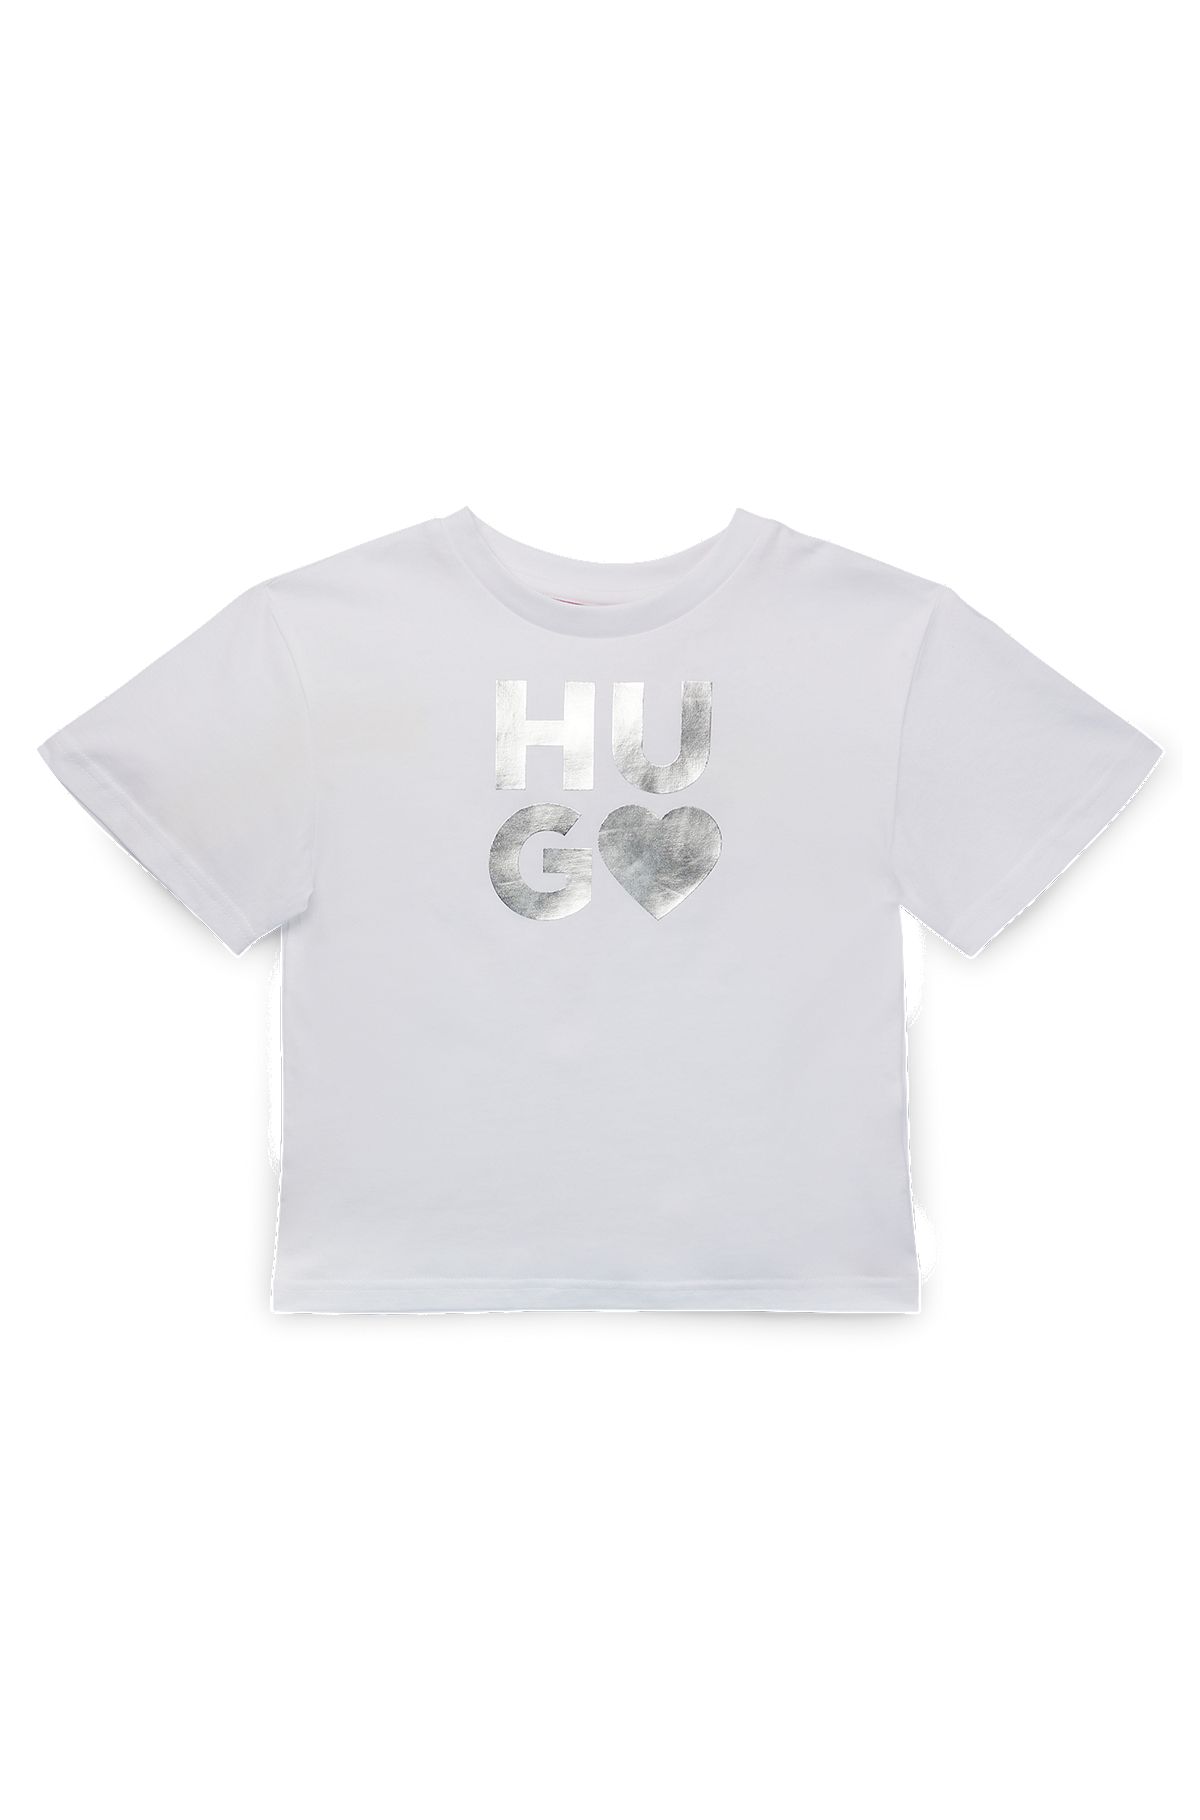 Kids' cotton-jersey T-shirt with seasonal logo, White